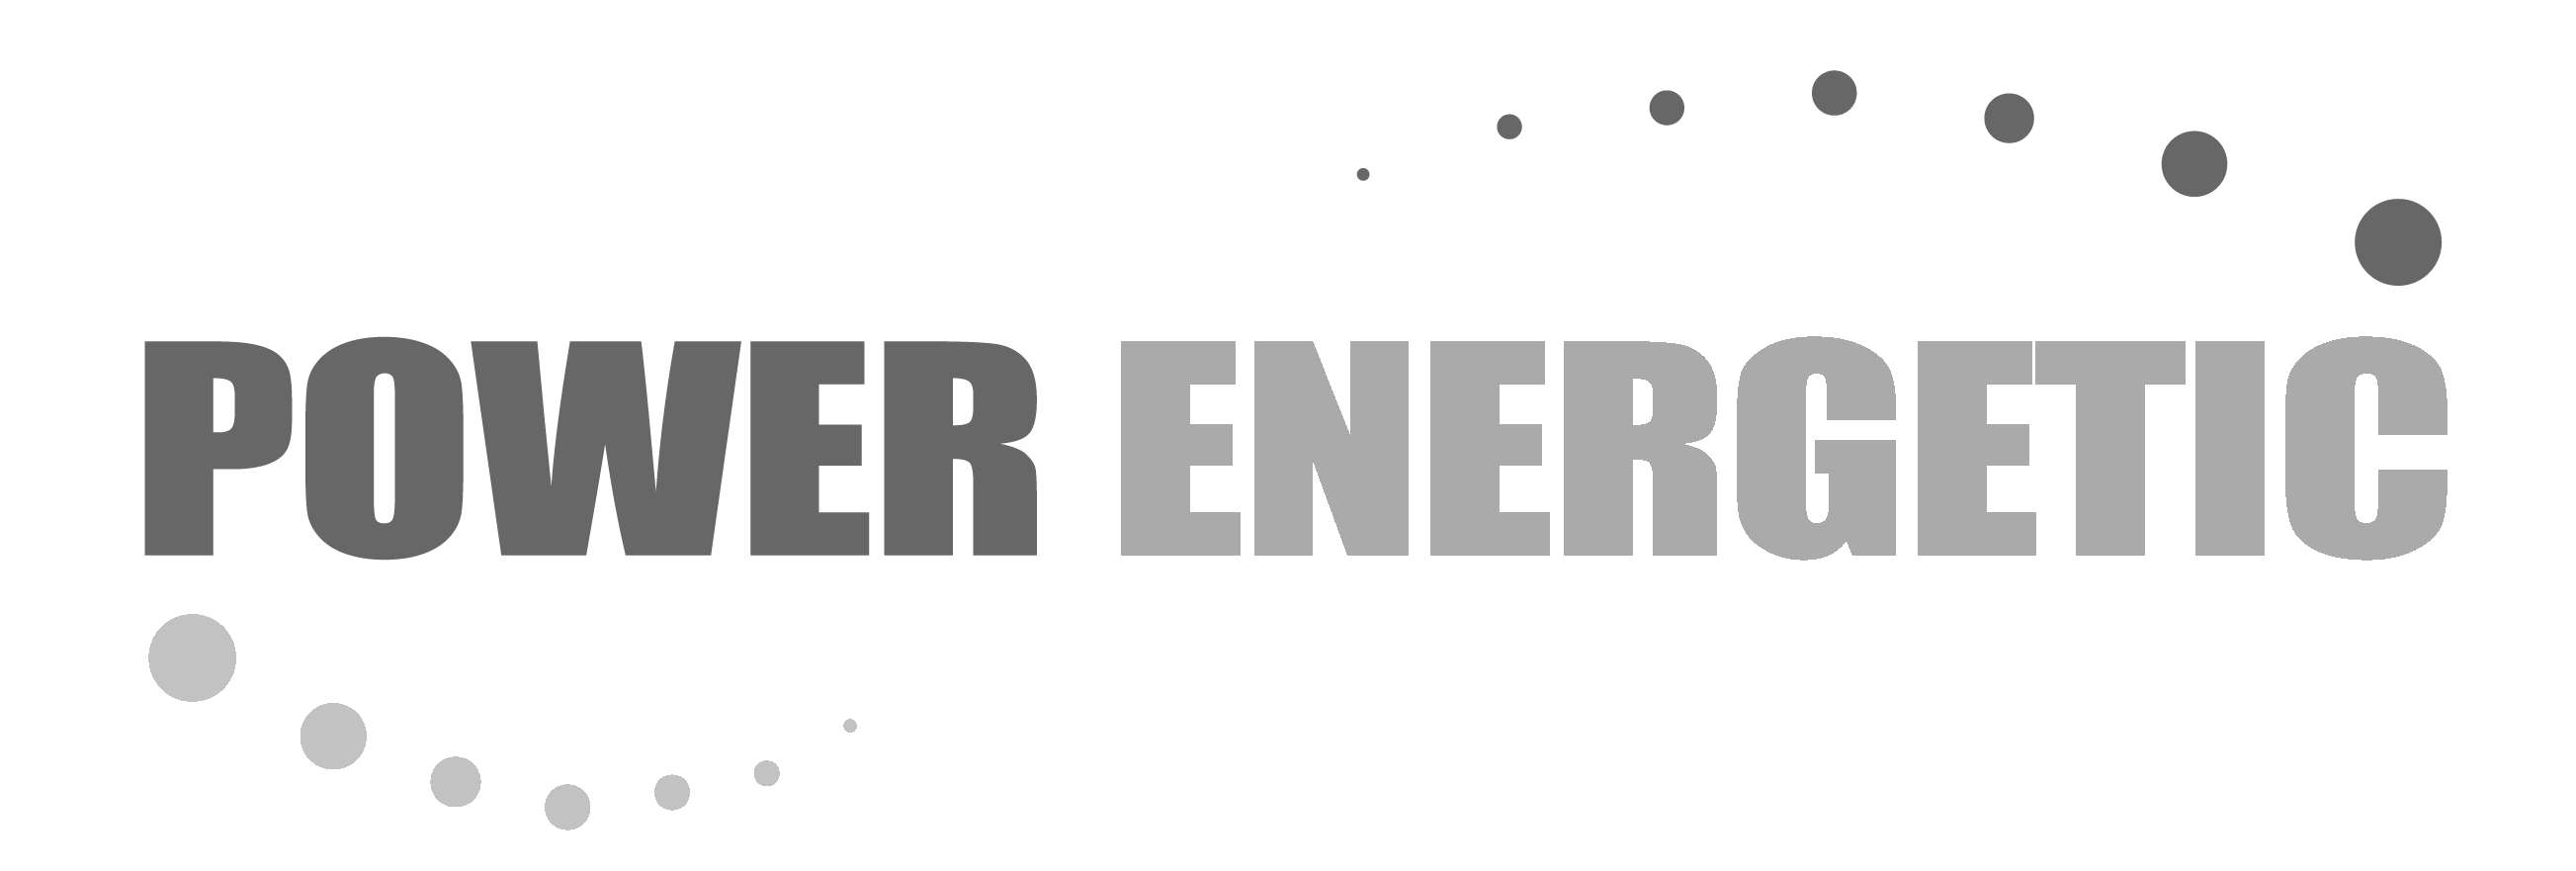 Logo PowerEnergetic negro